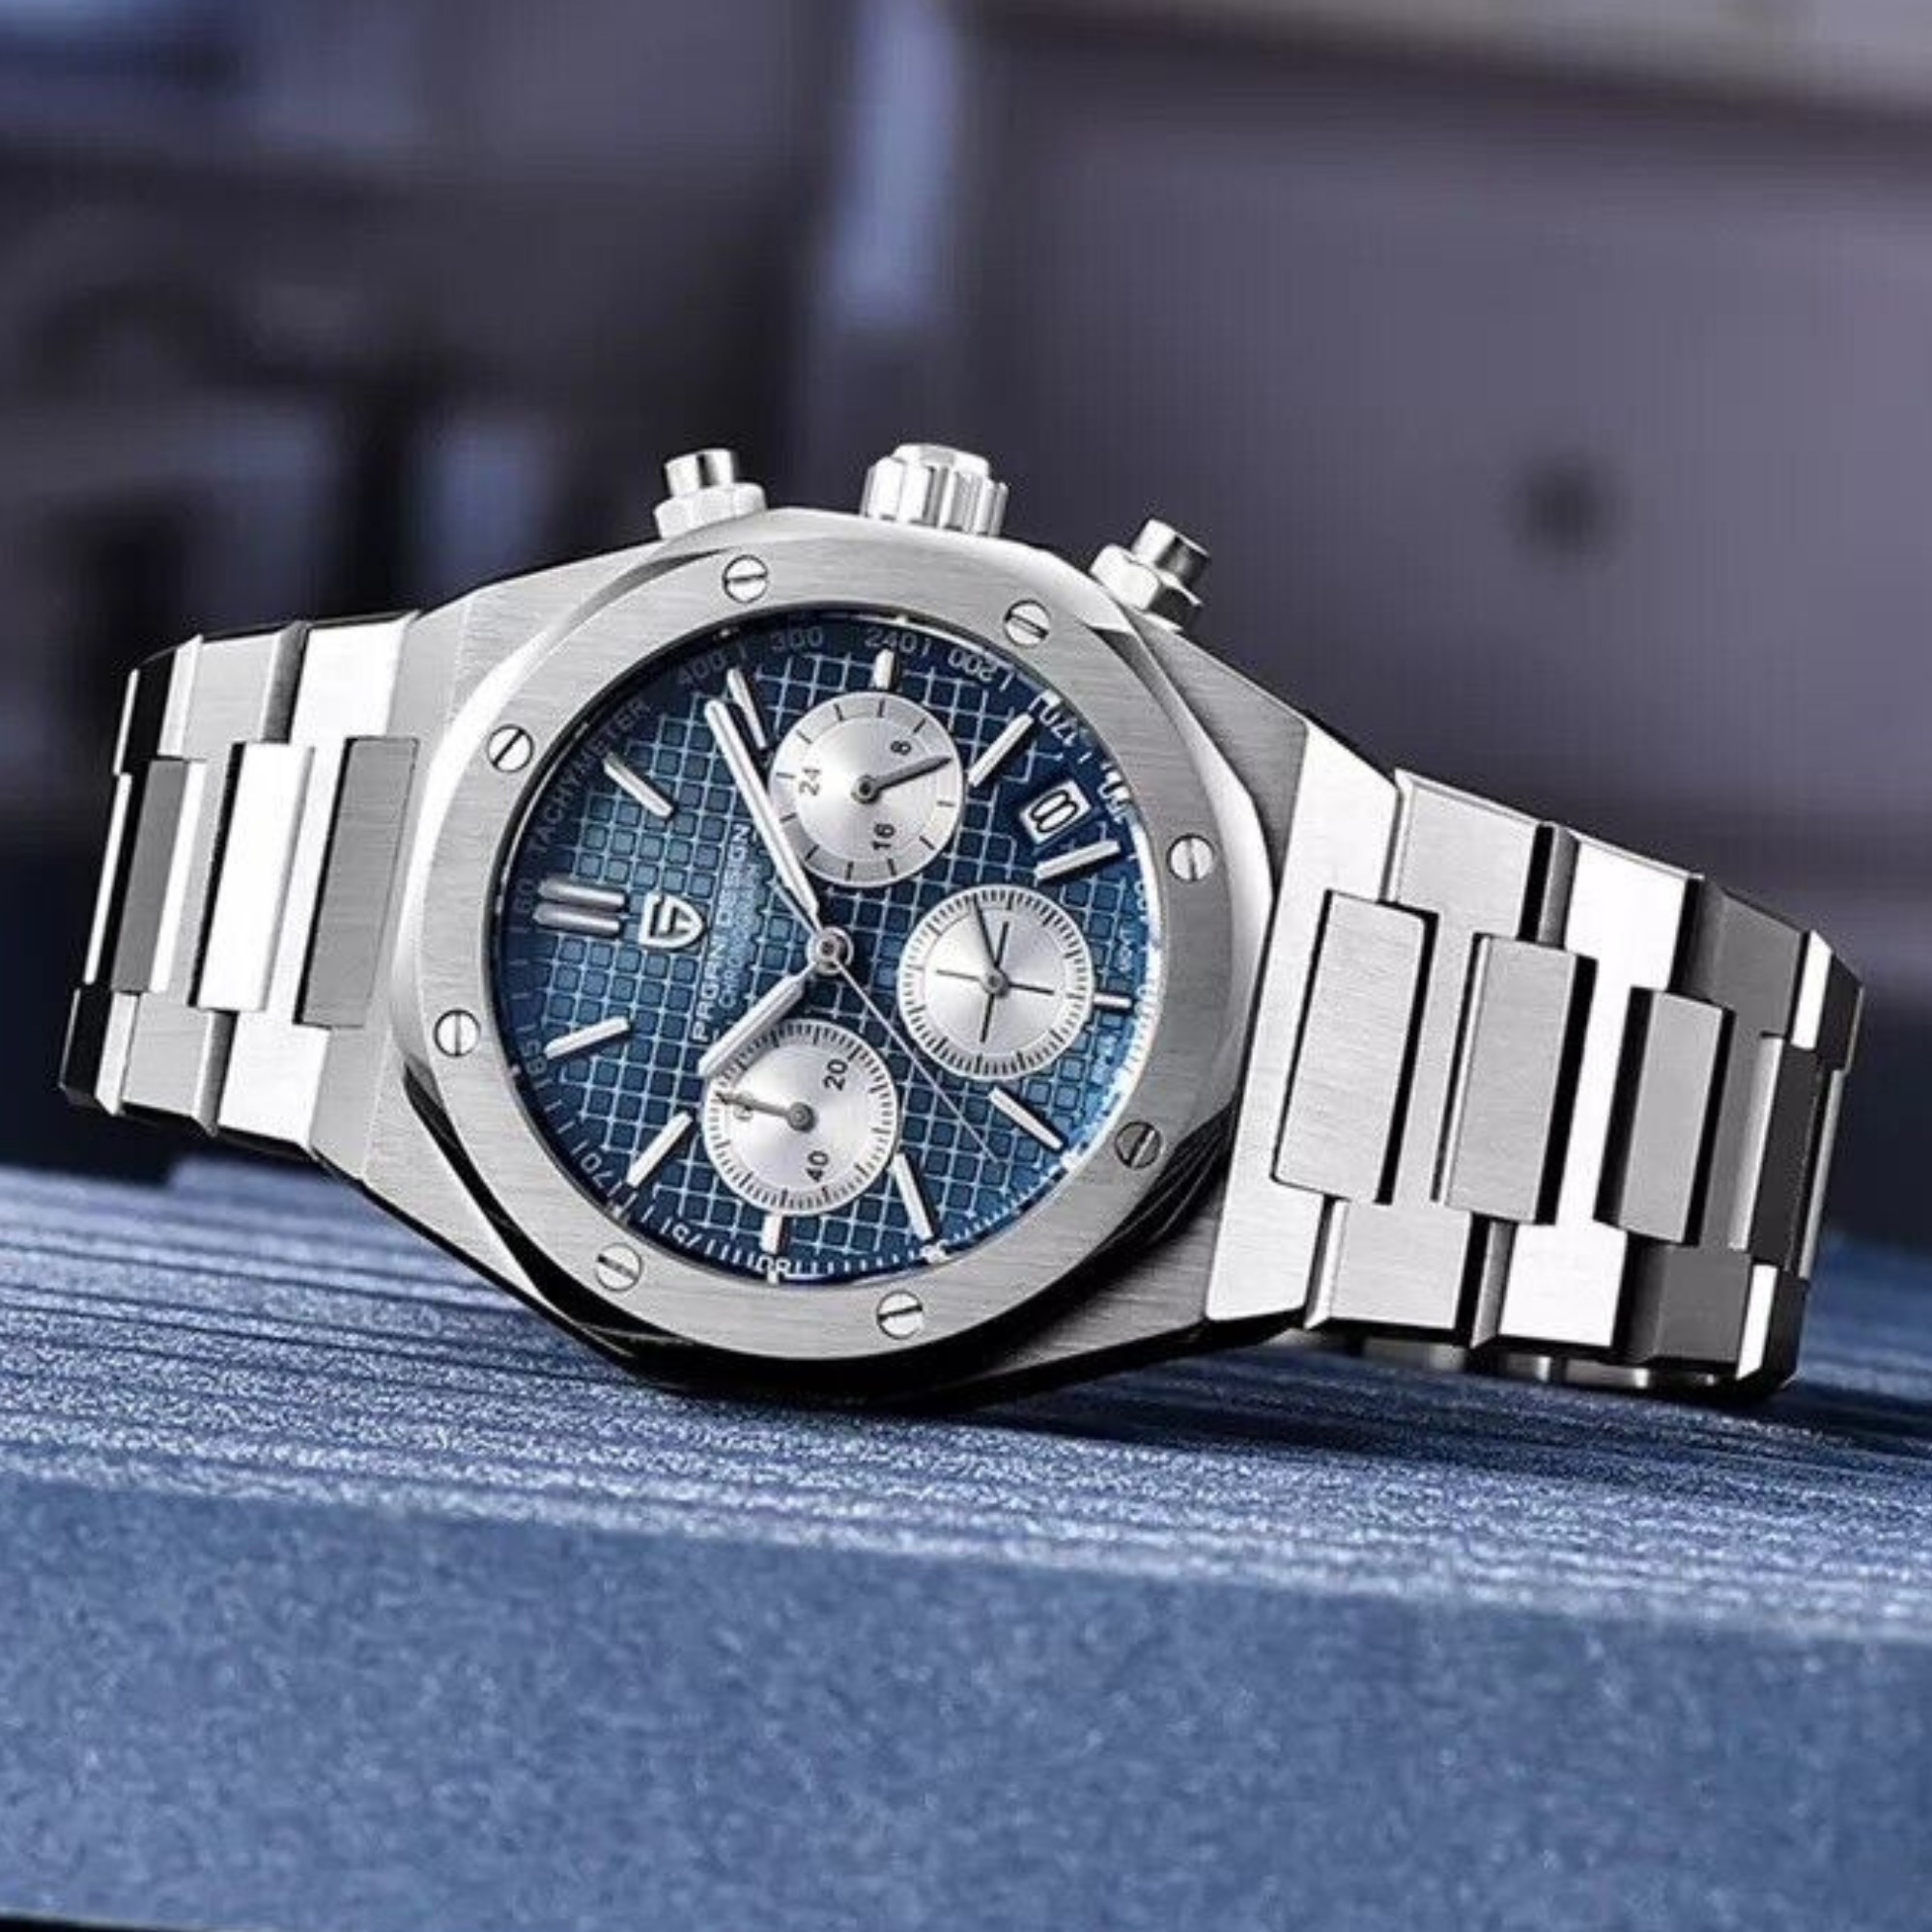 Pagani Design PD-1707 Royal Oak Men's 40mm Seiko VK63 Movement Watch 100M Waterproof Sapphire Crystal Stainless Steel Luminous Watch - Blue Dial